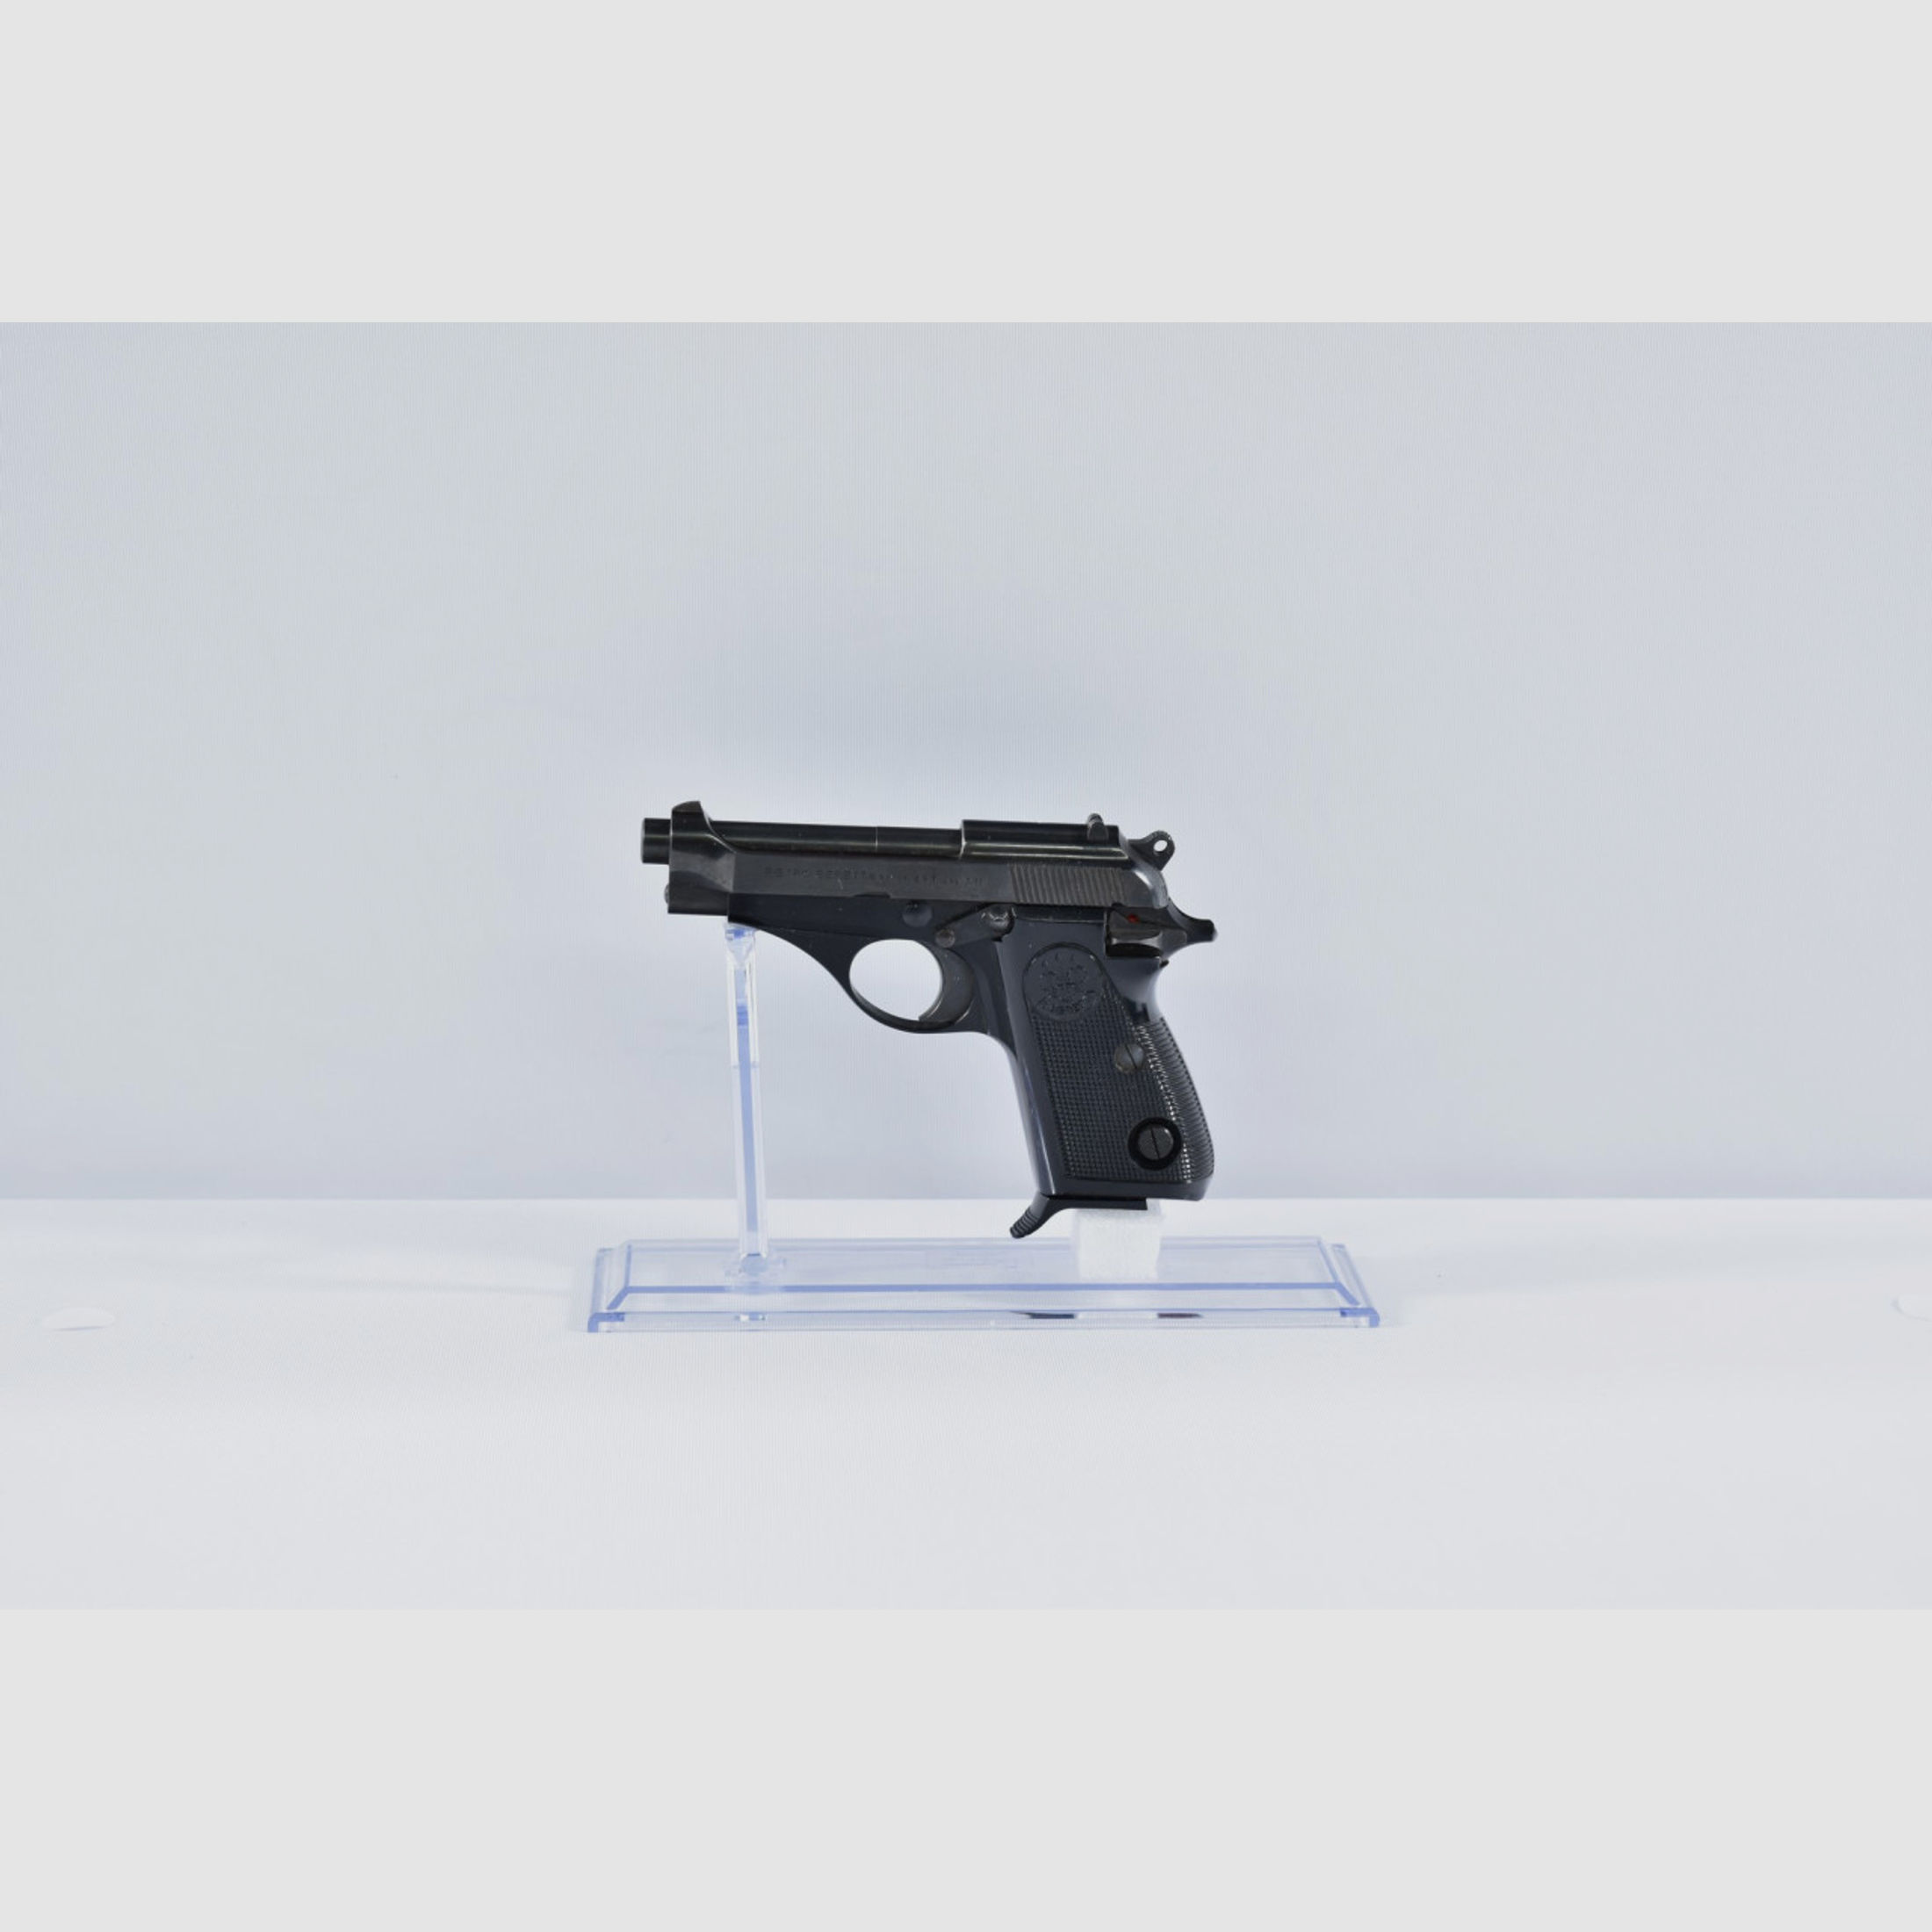 Beretta 70 7,65mmBrowning Pistole